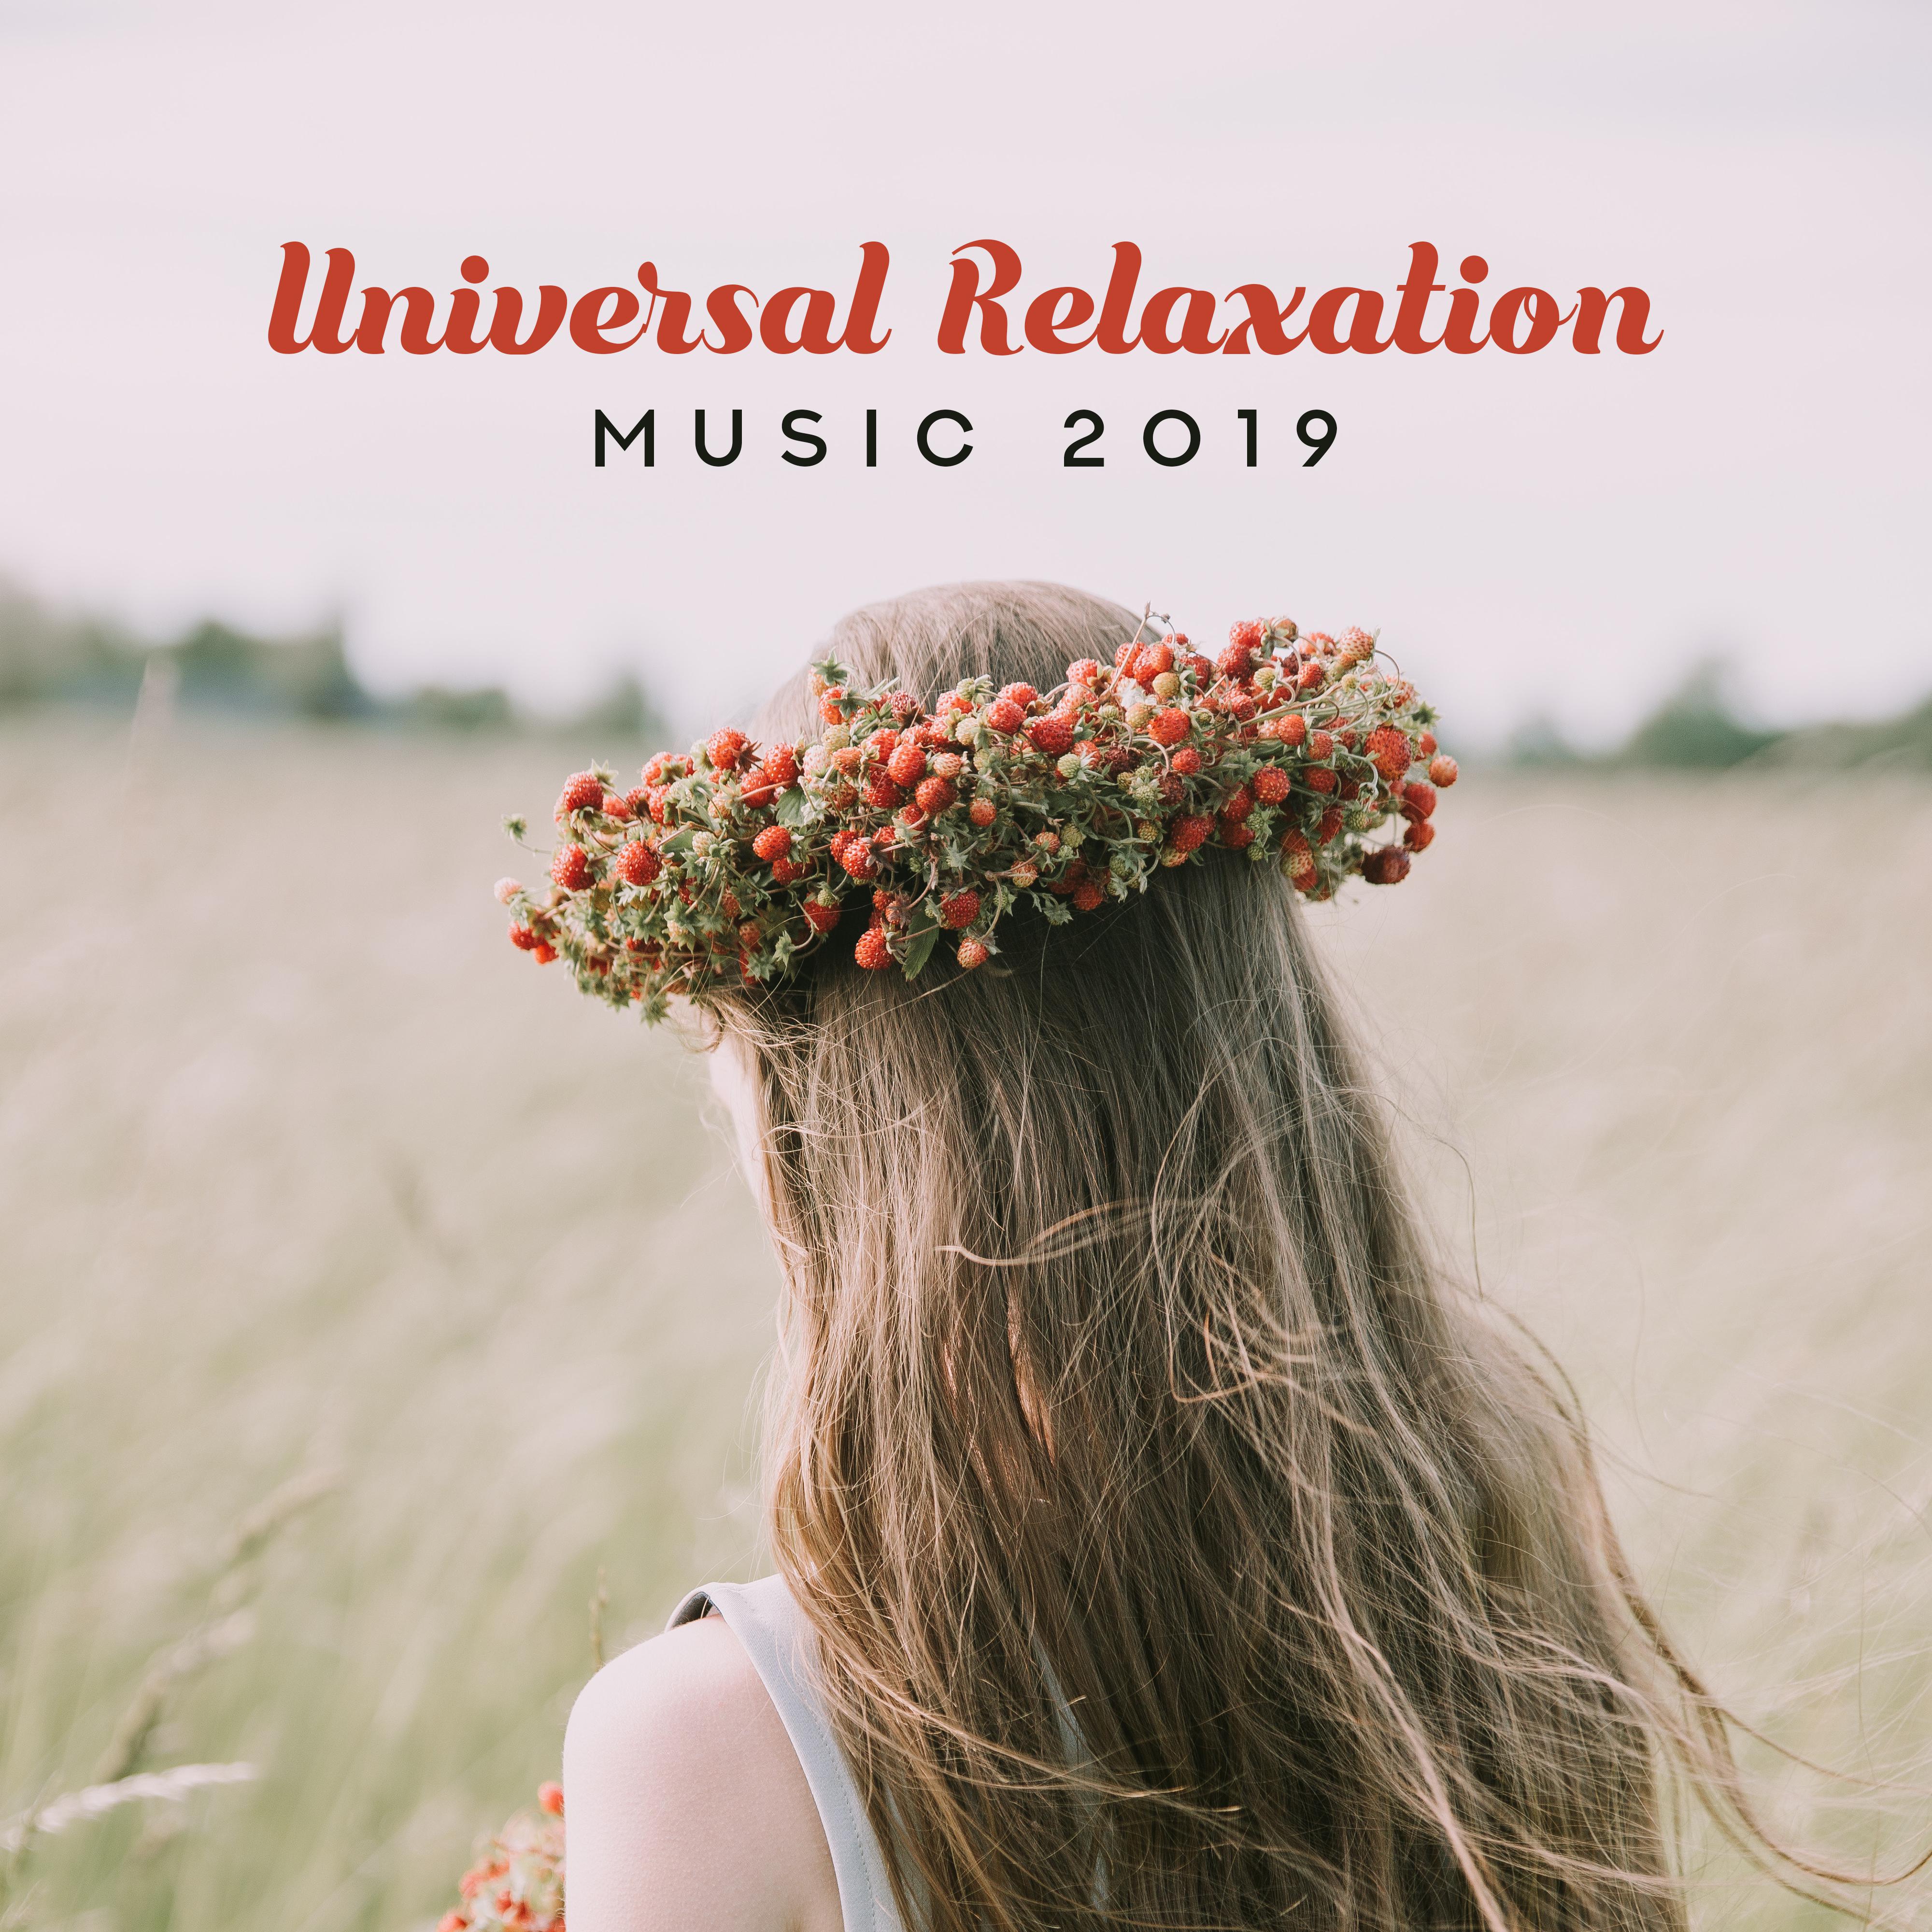 Universal Relaxation Music 2019